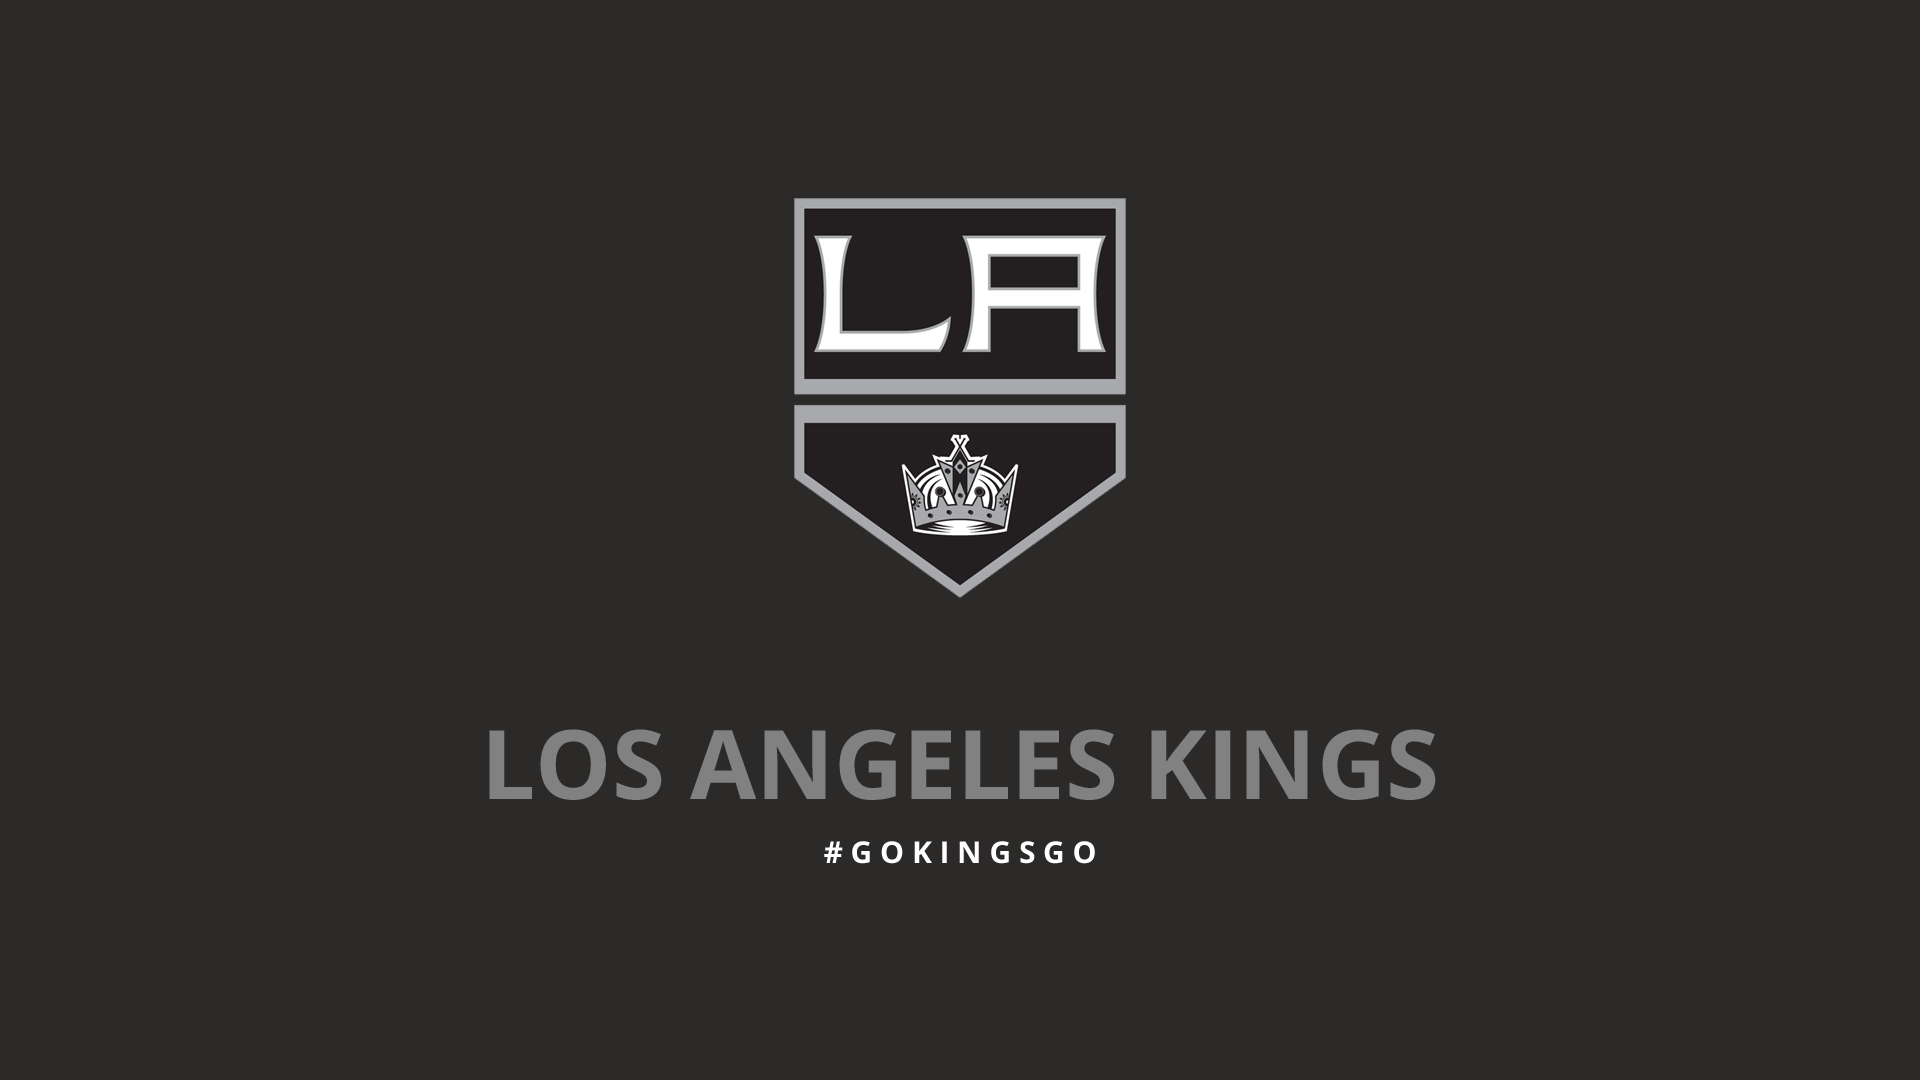 Minimalist Los Angeles Kings wallpaper by lfiore on